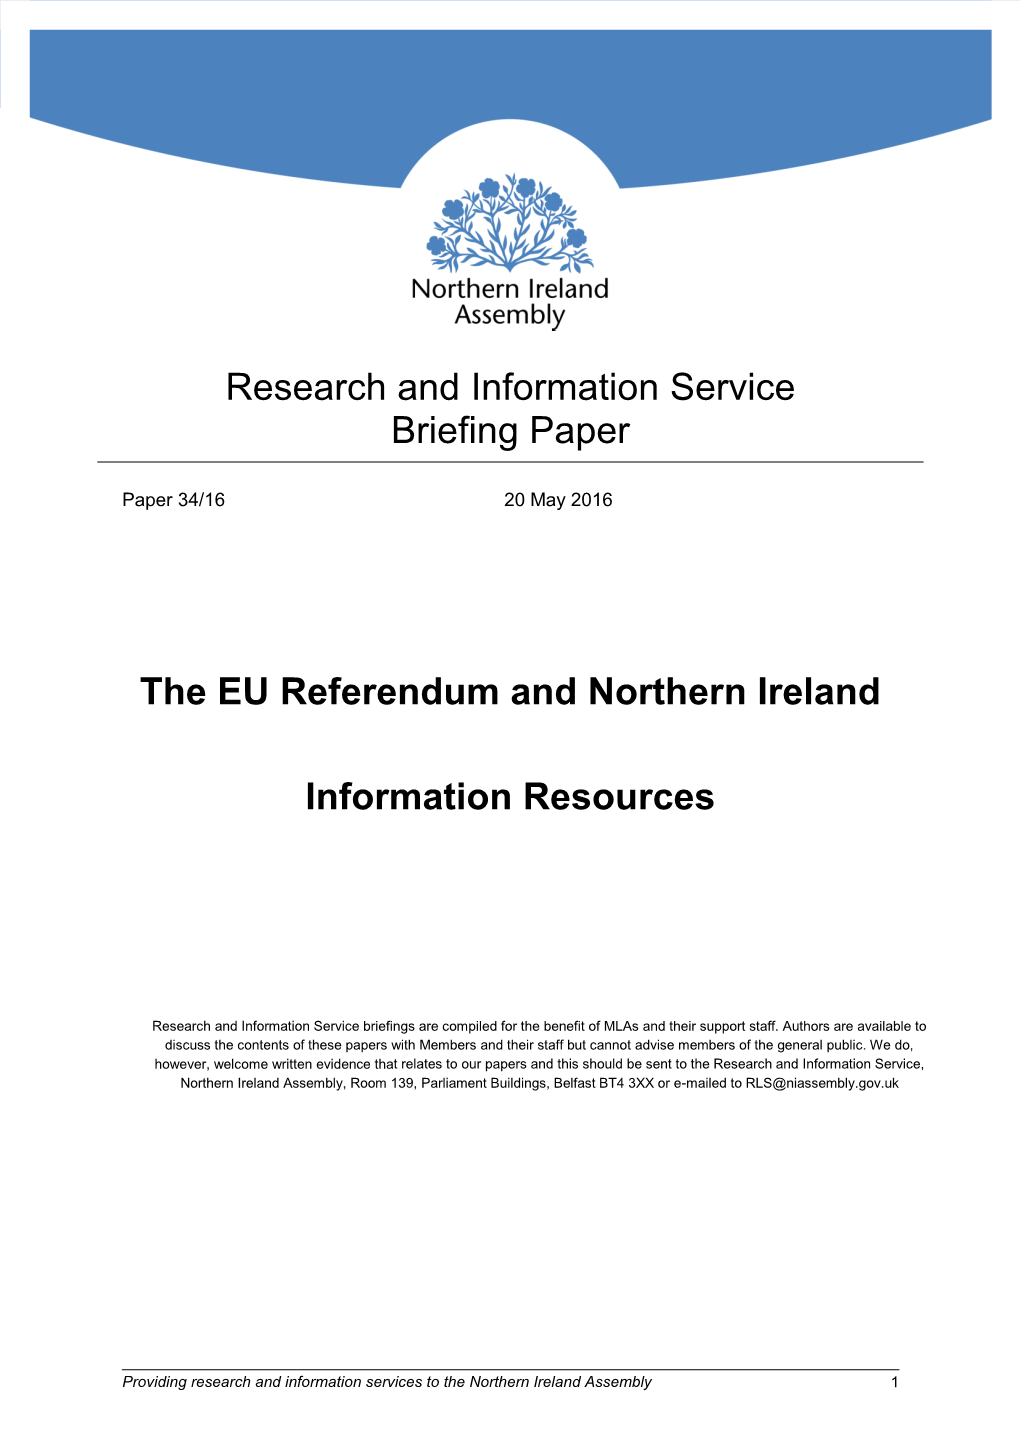 The EU Referendum and Northern Ireland: Information Resources